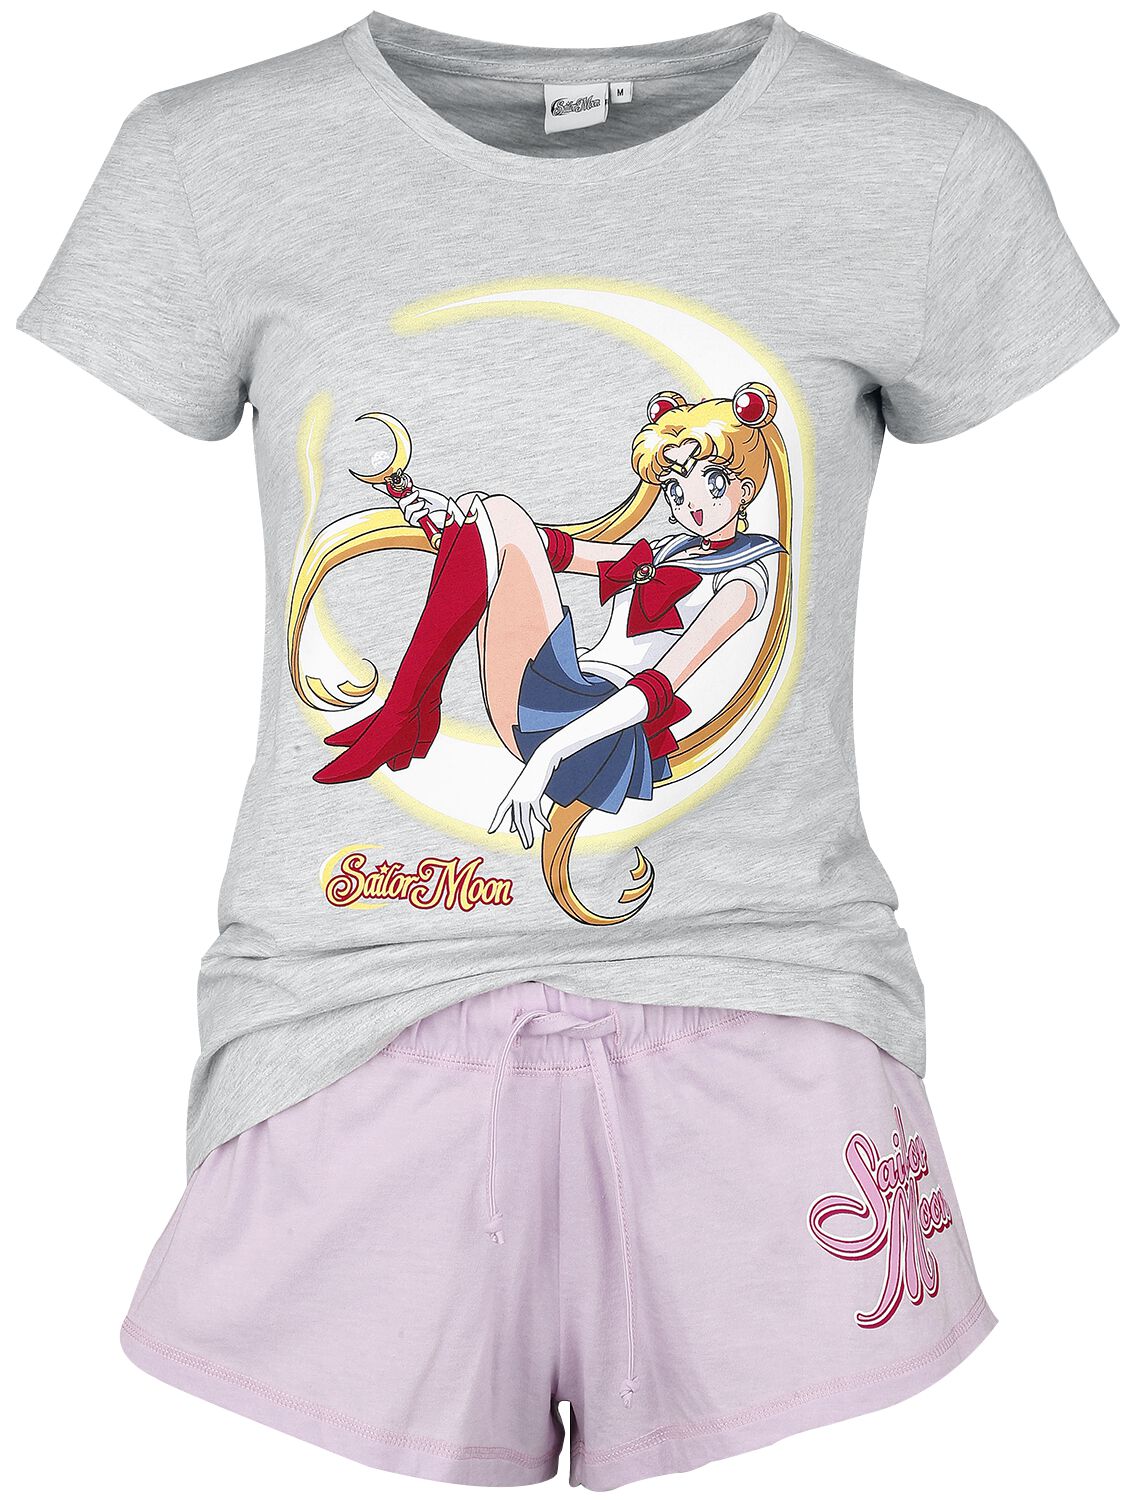 sailor moon - anime schlafanzug - s bis xxl - fÃ¼r damen - grÃ¶ÃŸe s - - emp exklusives merchandise! multicolor donna